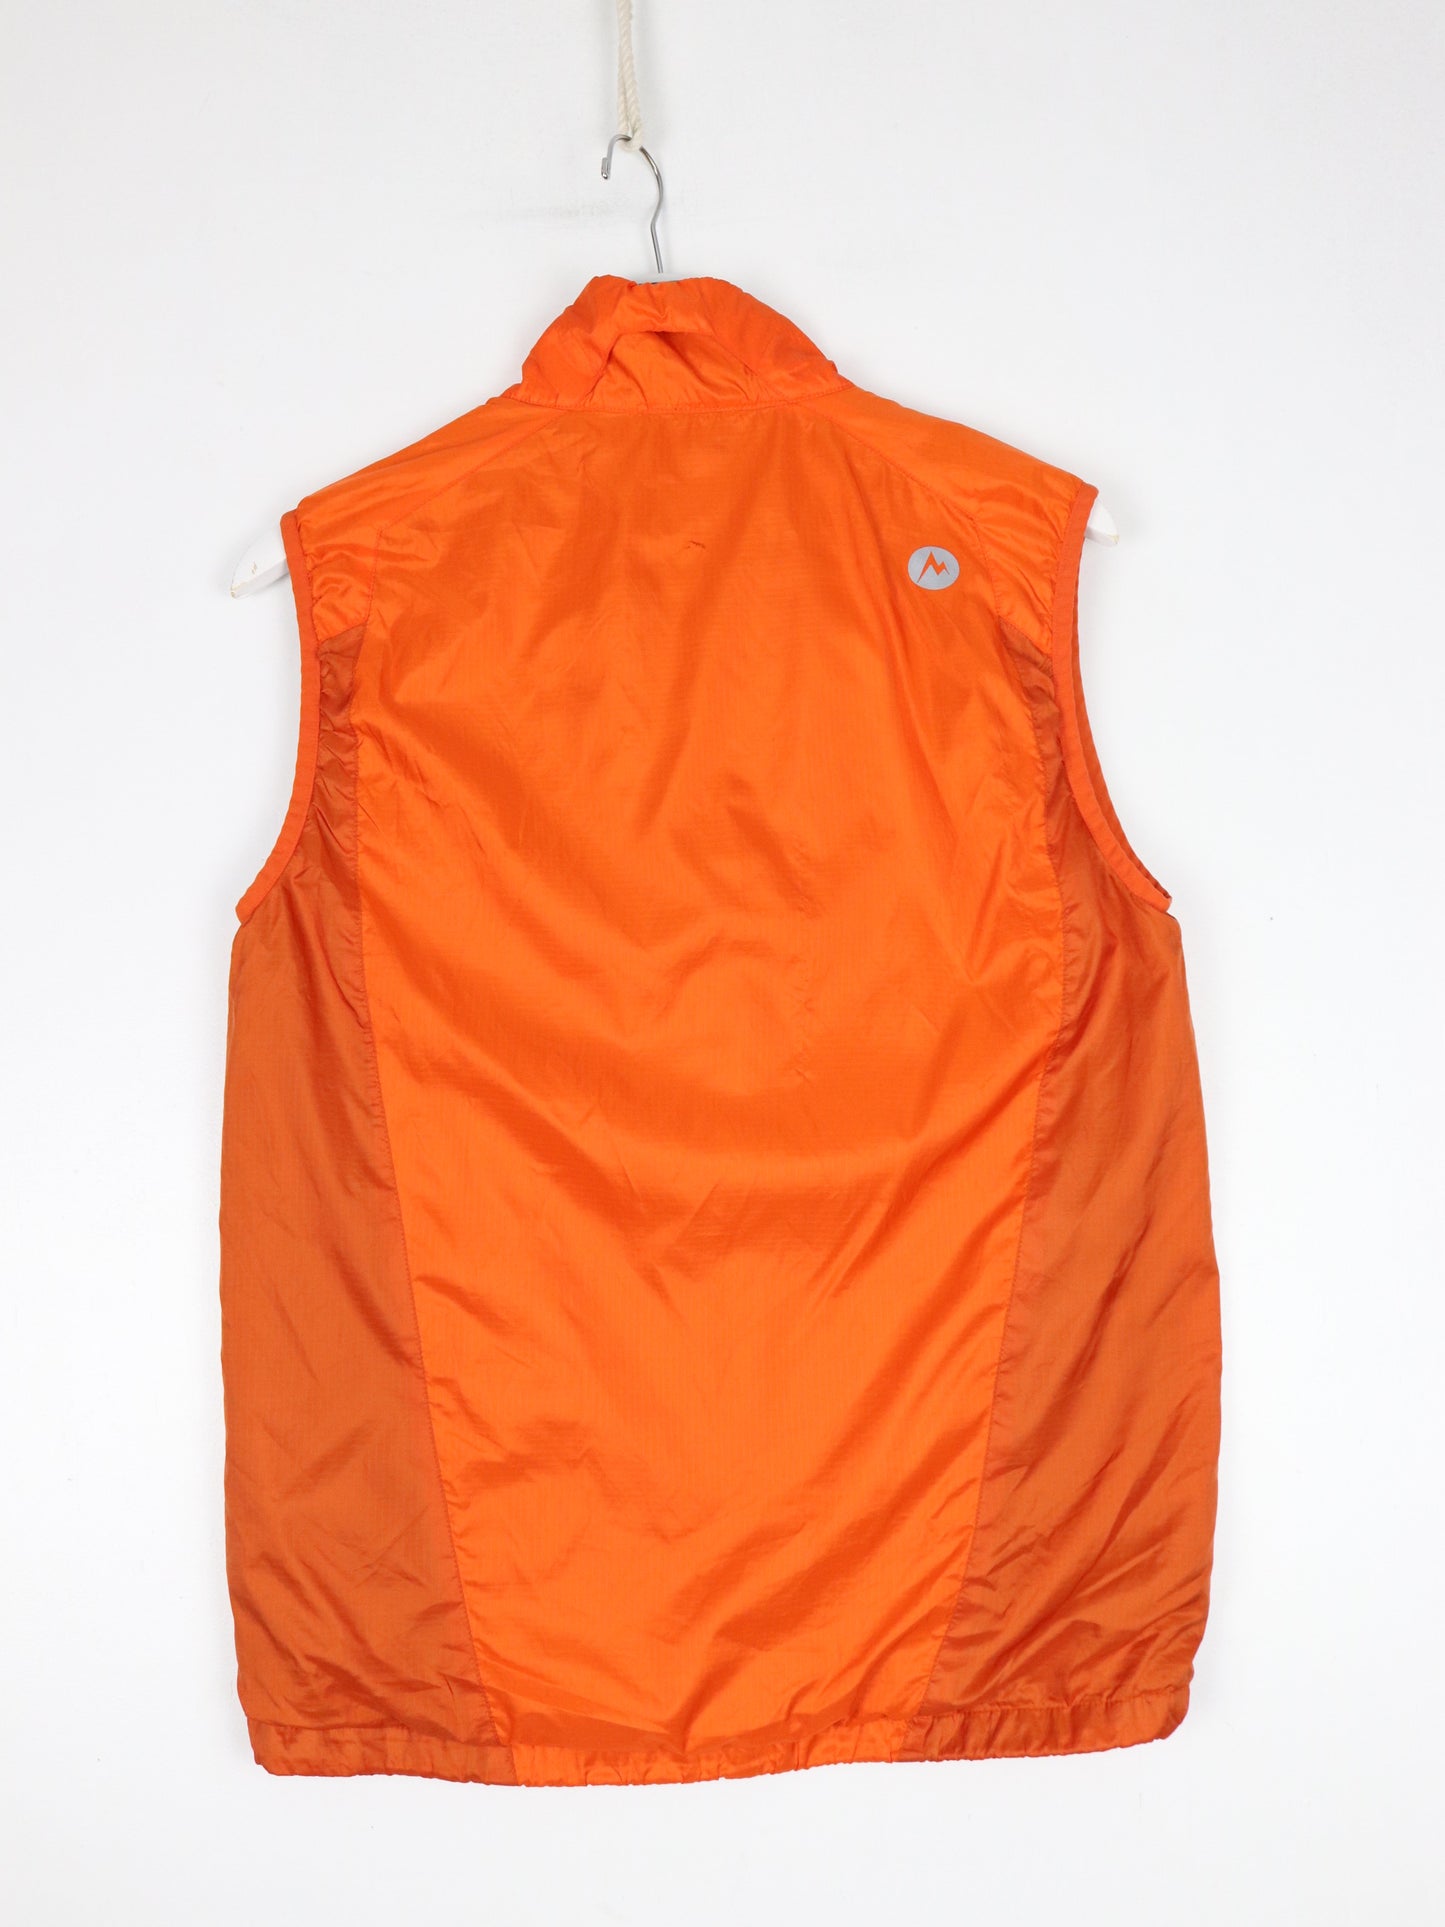 Marmot Vest Mens Small Orange Windbreaker Jacket Outdoors